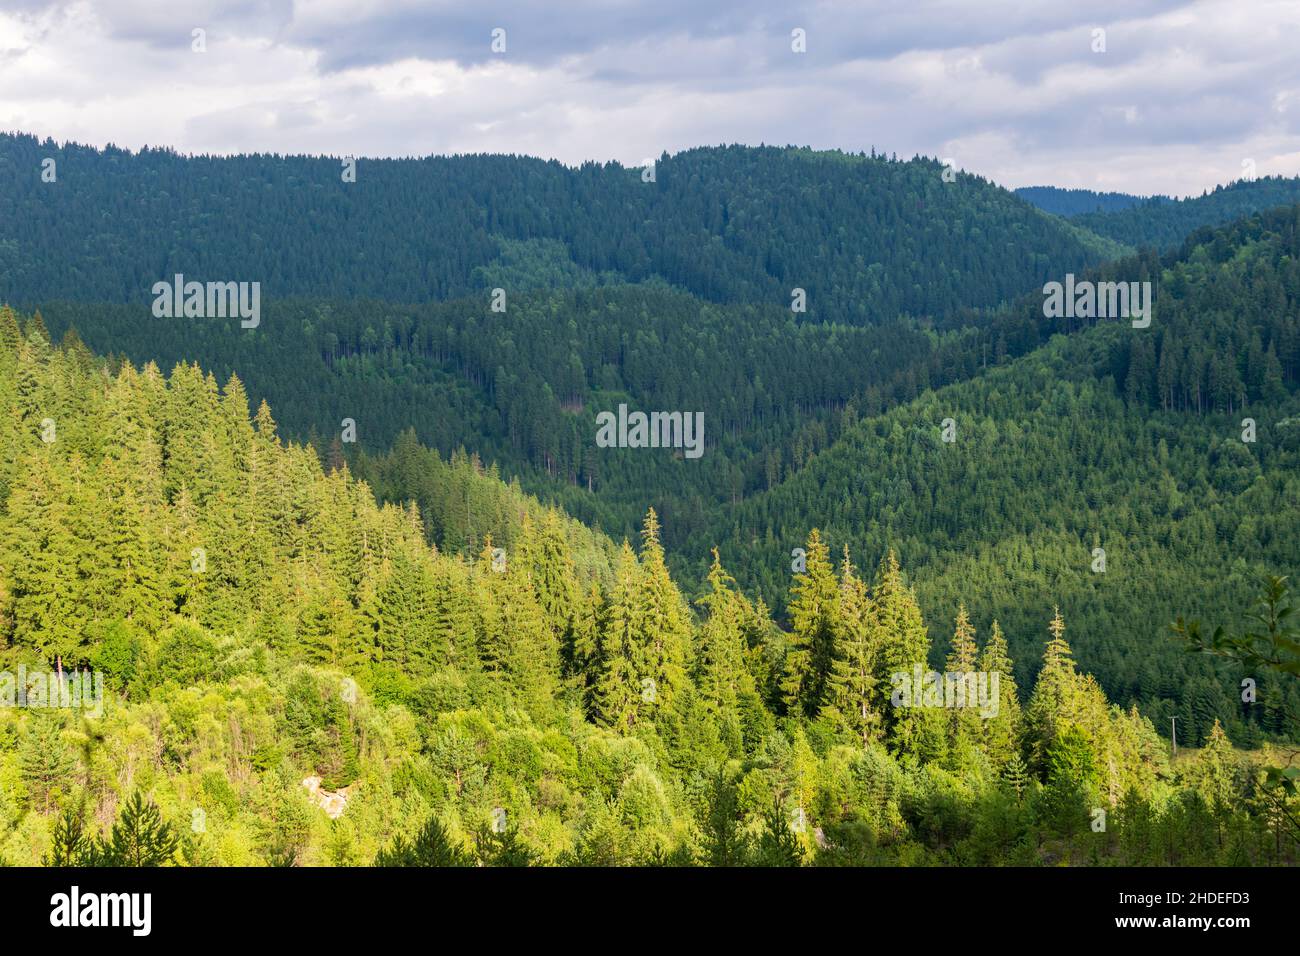 A fir forest landscape from the Fairies Garden, Borsec, Romania Stock Photo